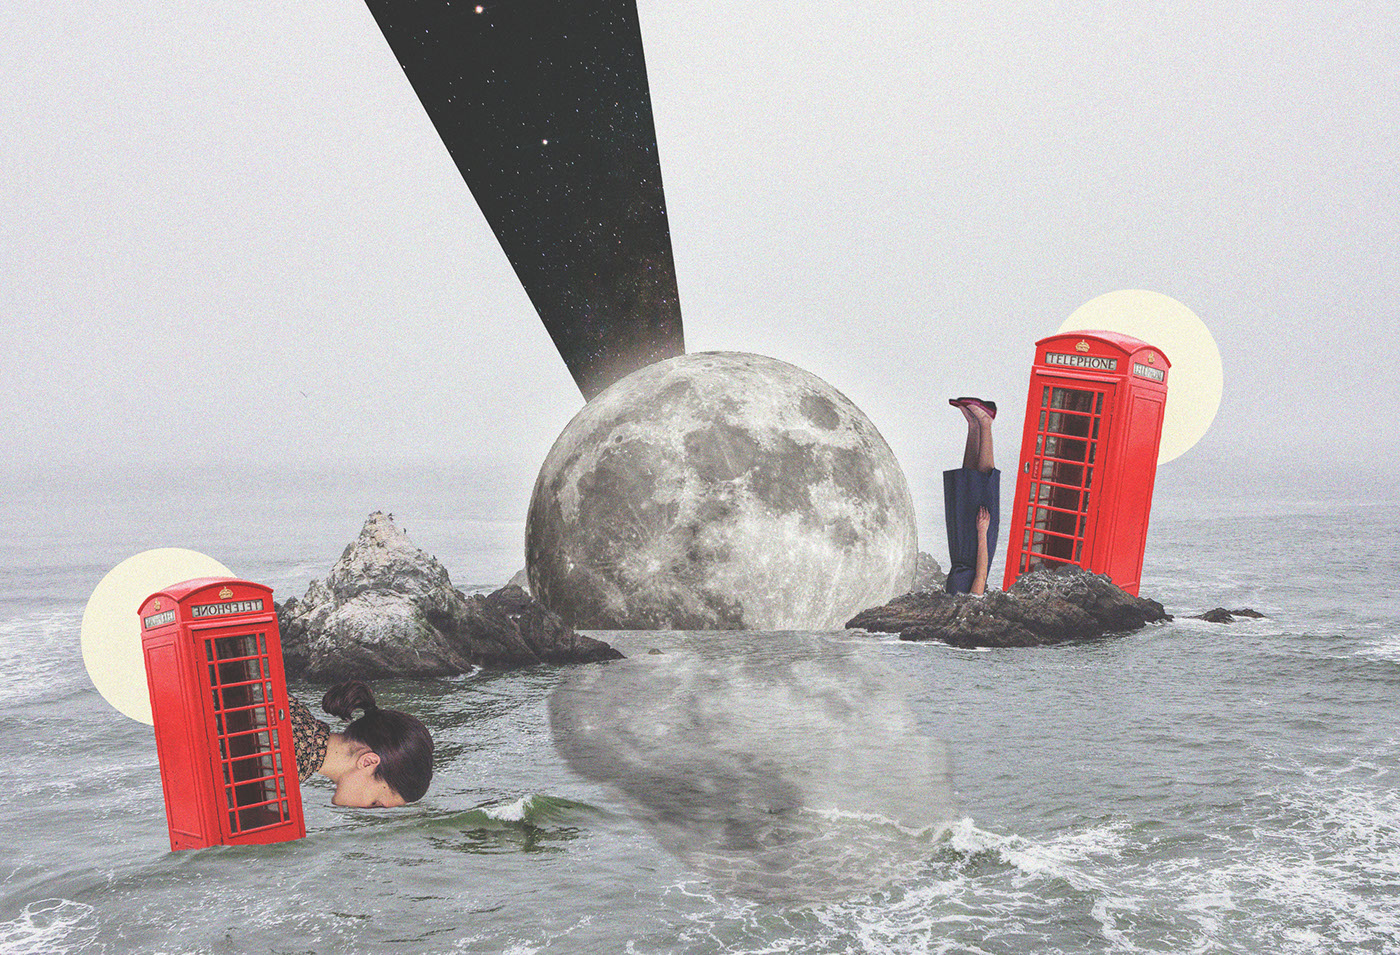 night phone telephone booth girl upside moon sea water yello